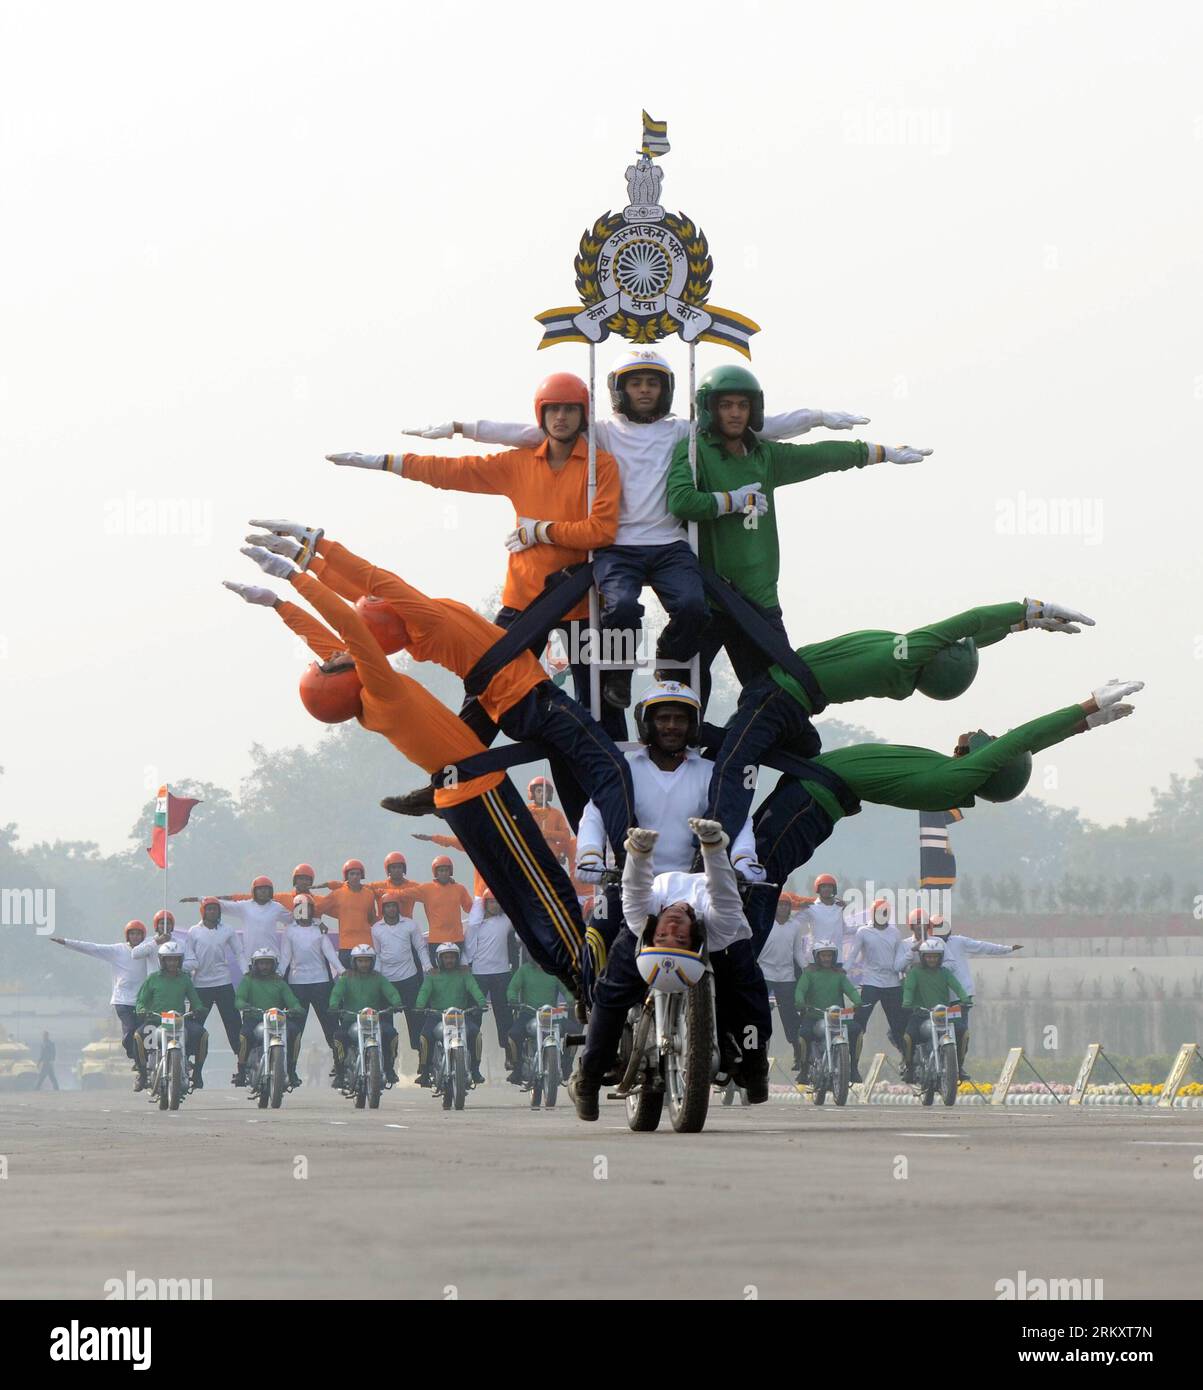 Bildnummer: 59082930  Datum: 15.01.2013  Copyright: imago/Xinhua (130115) -- NEW DELHI, Jan. 15, 2013 (Xinhua) -- Indian army soldiers perform a stunt on motorcycles during the army day parade in New Delhi, capital of India, Jan. 15, 2013. (Xinhua/Partha Sarkar)(rh) INDIA-NEW DELHI-ARMY DAY-PARADE PUBLICATIONxNOTxINxCHN Gesellschaft Militär Armee Parade Vorführung Übung x0x xmb 2013 quadrat      59082930 Date 15 01 2013 Copyright Imago XINHUA  New Delhi Jan 15 2013 XINHUA Indian Army Soldiers perform a Stunt ON Motorcycles during The Army Day Parade in New Delhi Capital of India Jan 15 2013 XI Stock Photo